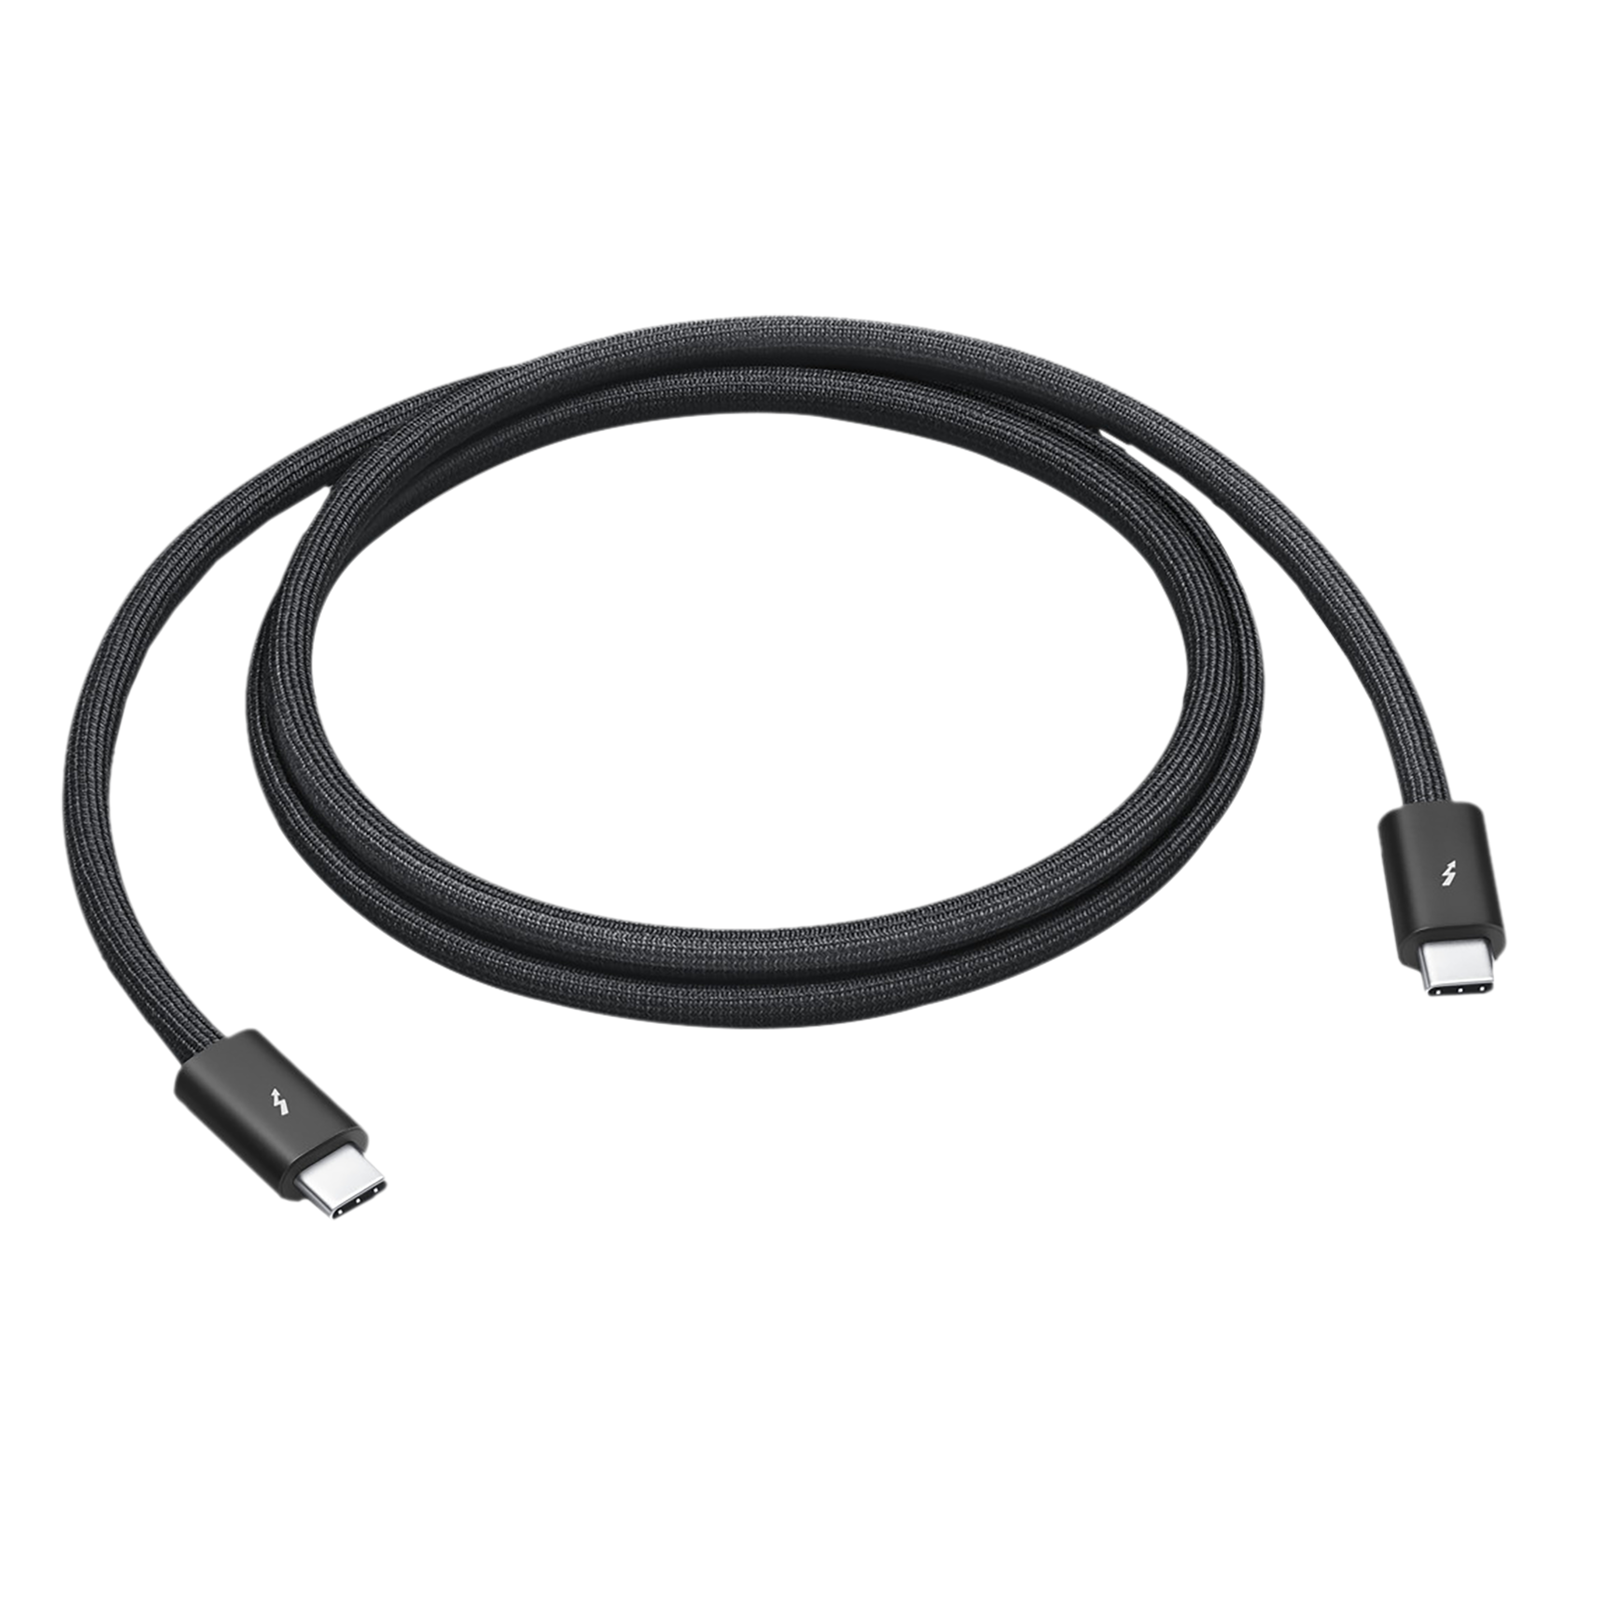 Thunderbolt 4 (USB‑C) Pro Cable (1m)